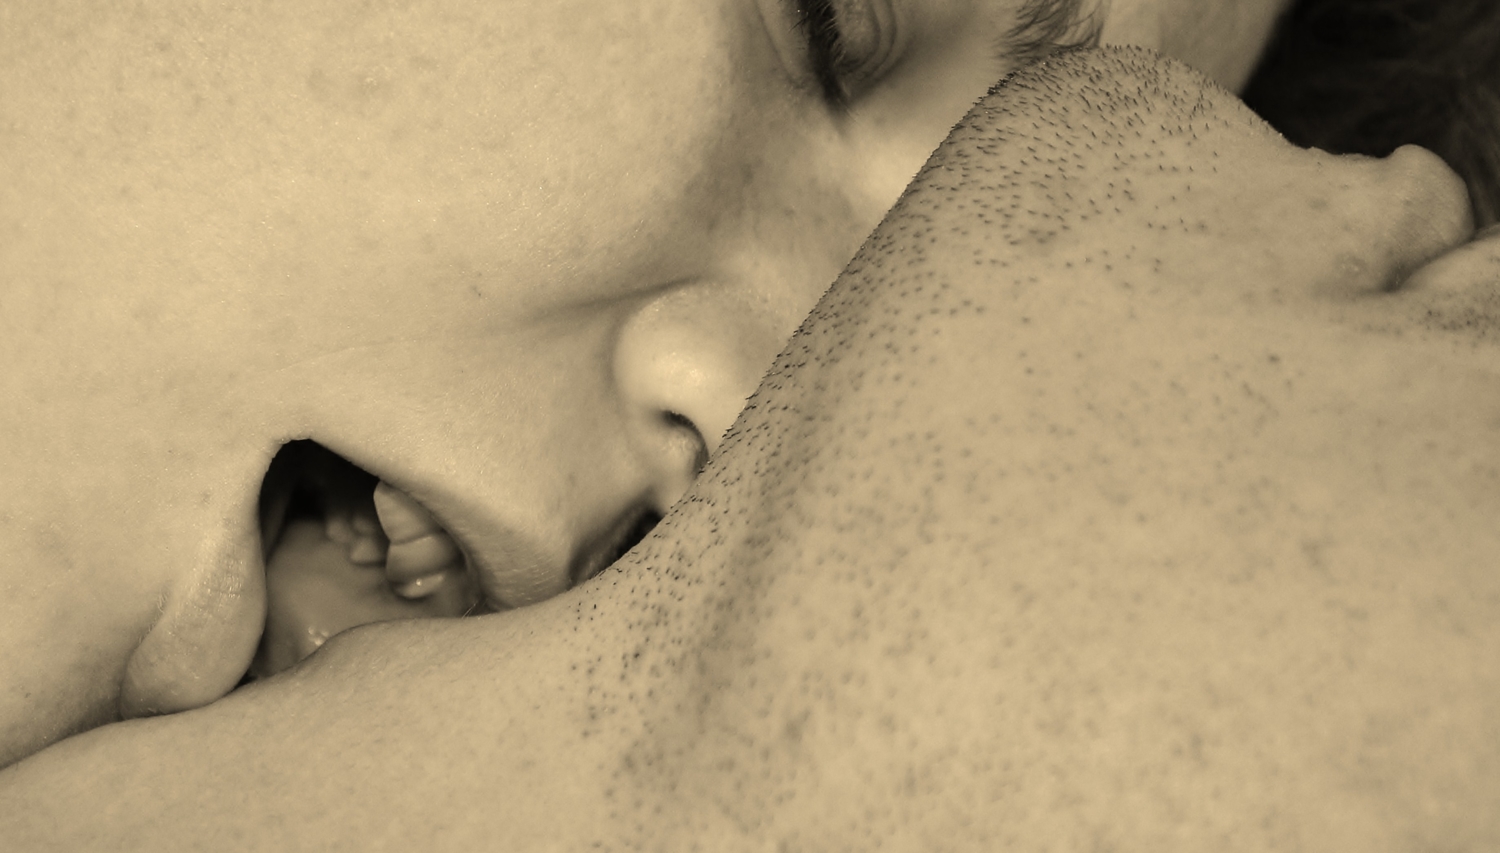 целует мужскую грудь картинки фото 62